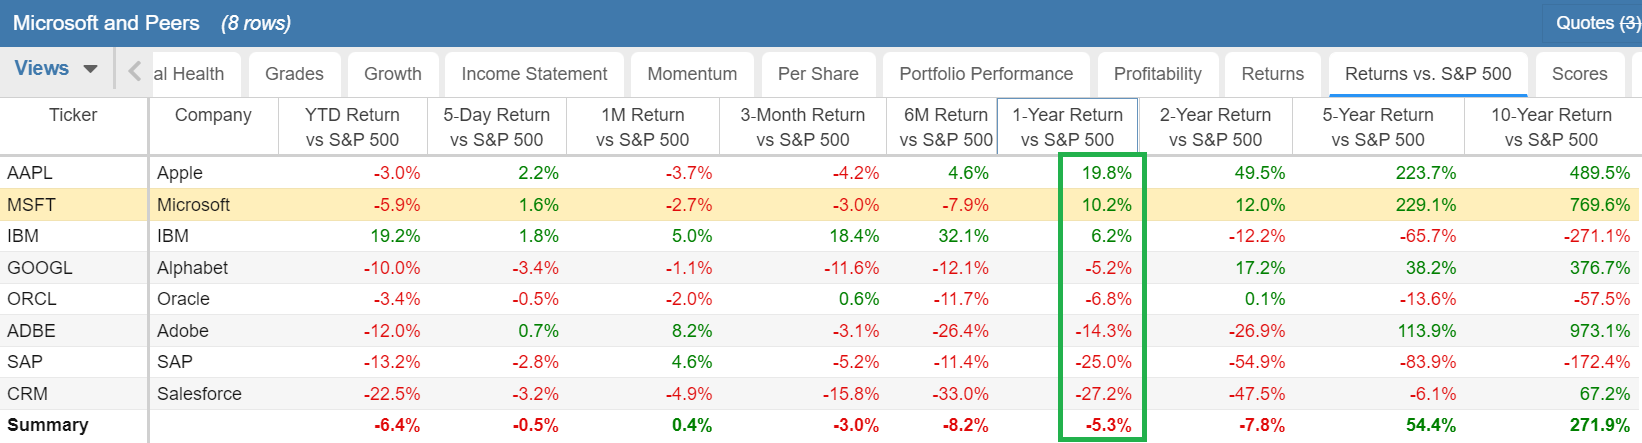 Returns vs S&P 500 Table